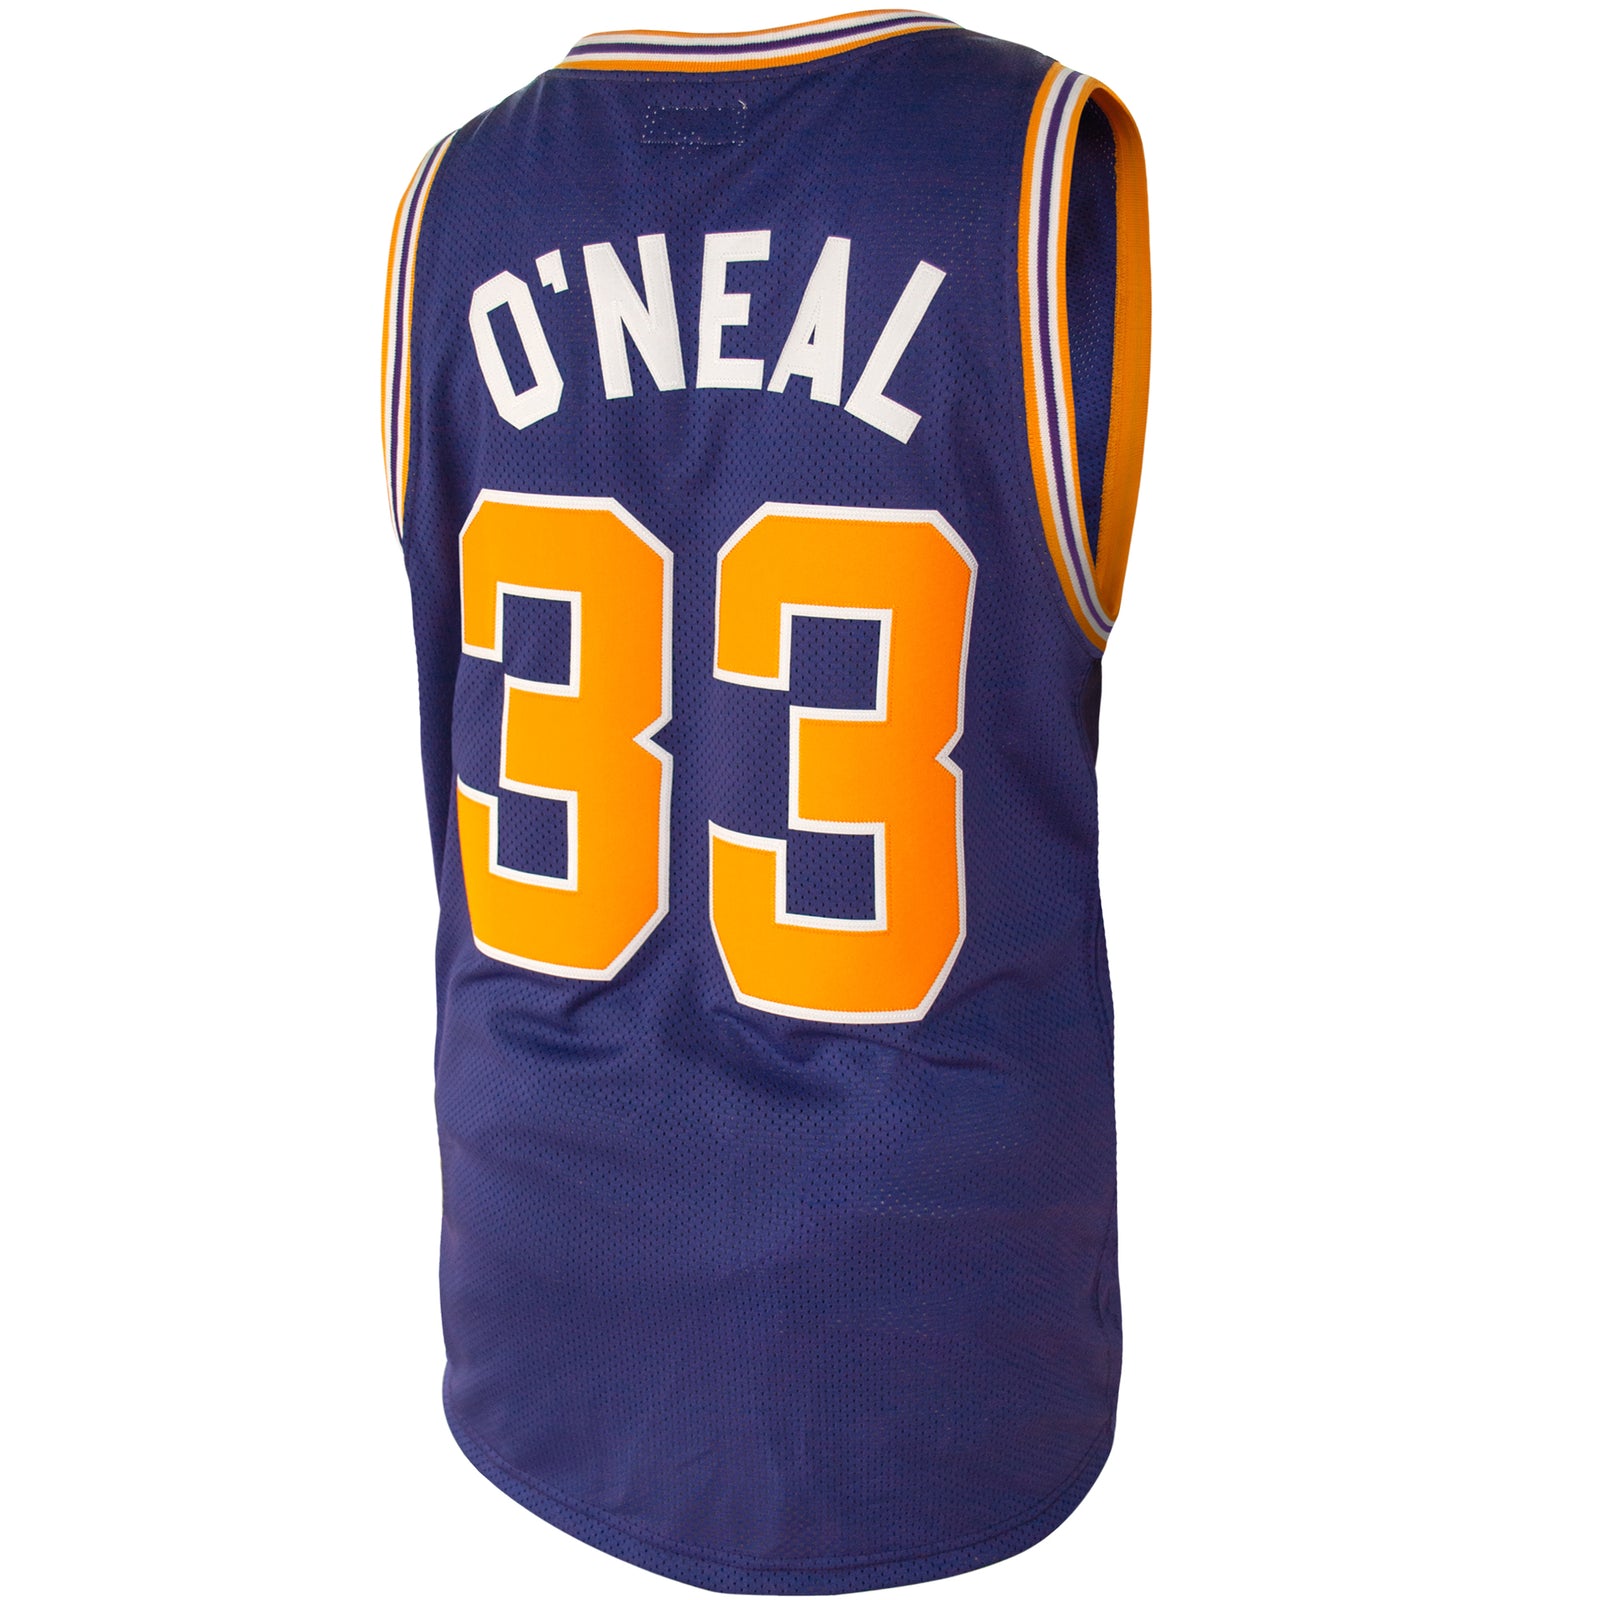 Men's Original Retro Brand Shaquille O'Neal Gold LSU Tigers Commemorative  Classic Basketball Jersey